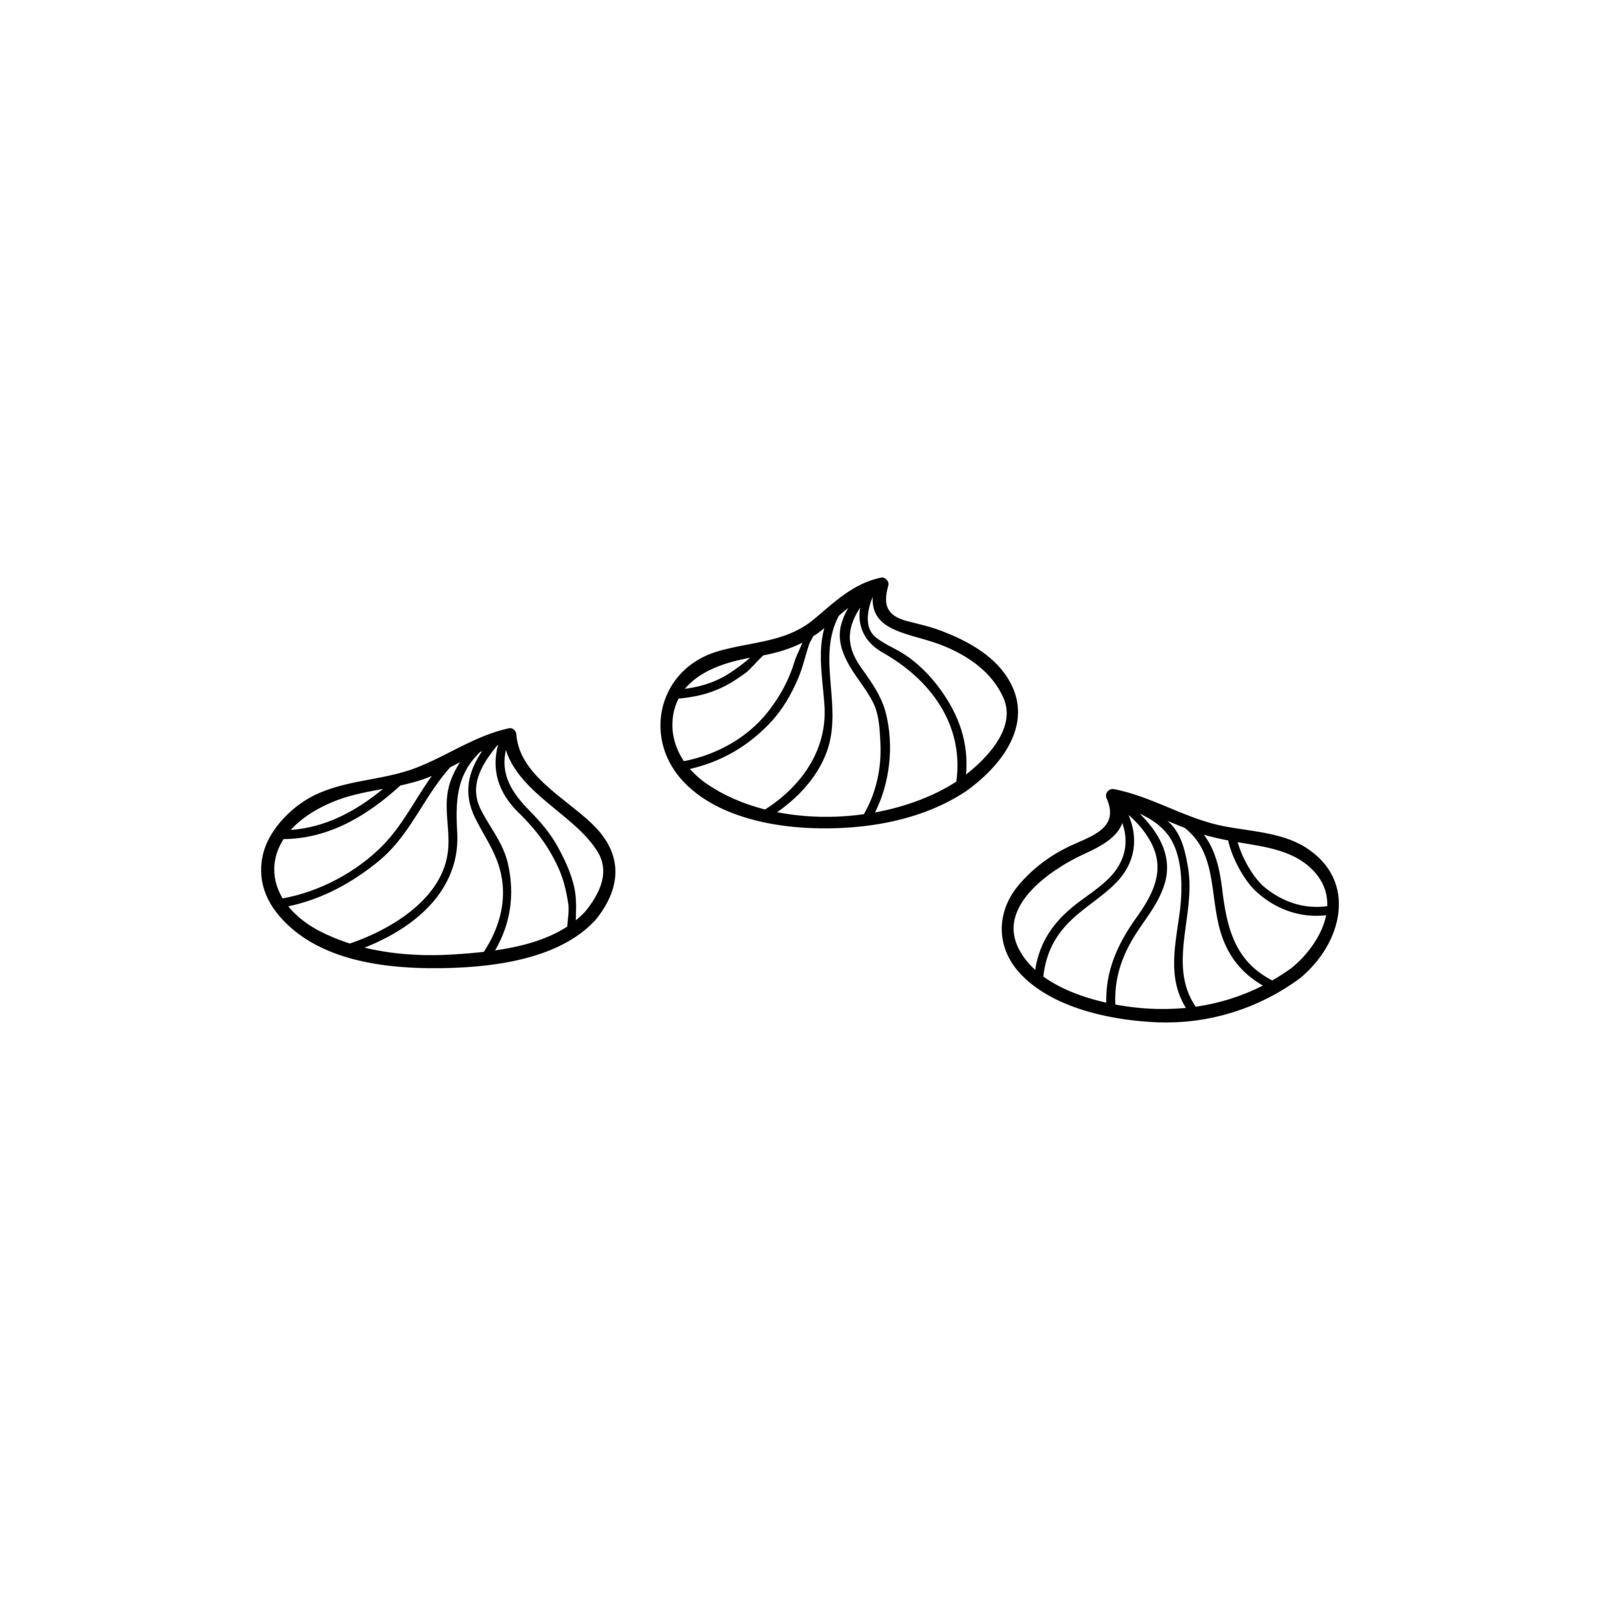 Doodle outline meringues. by Minur